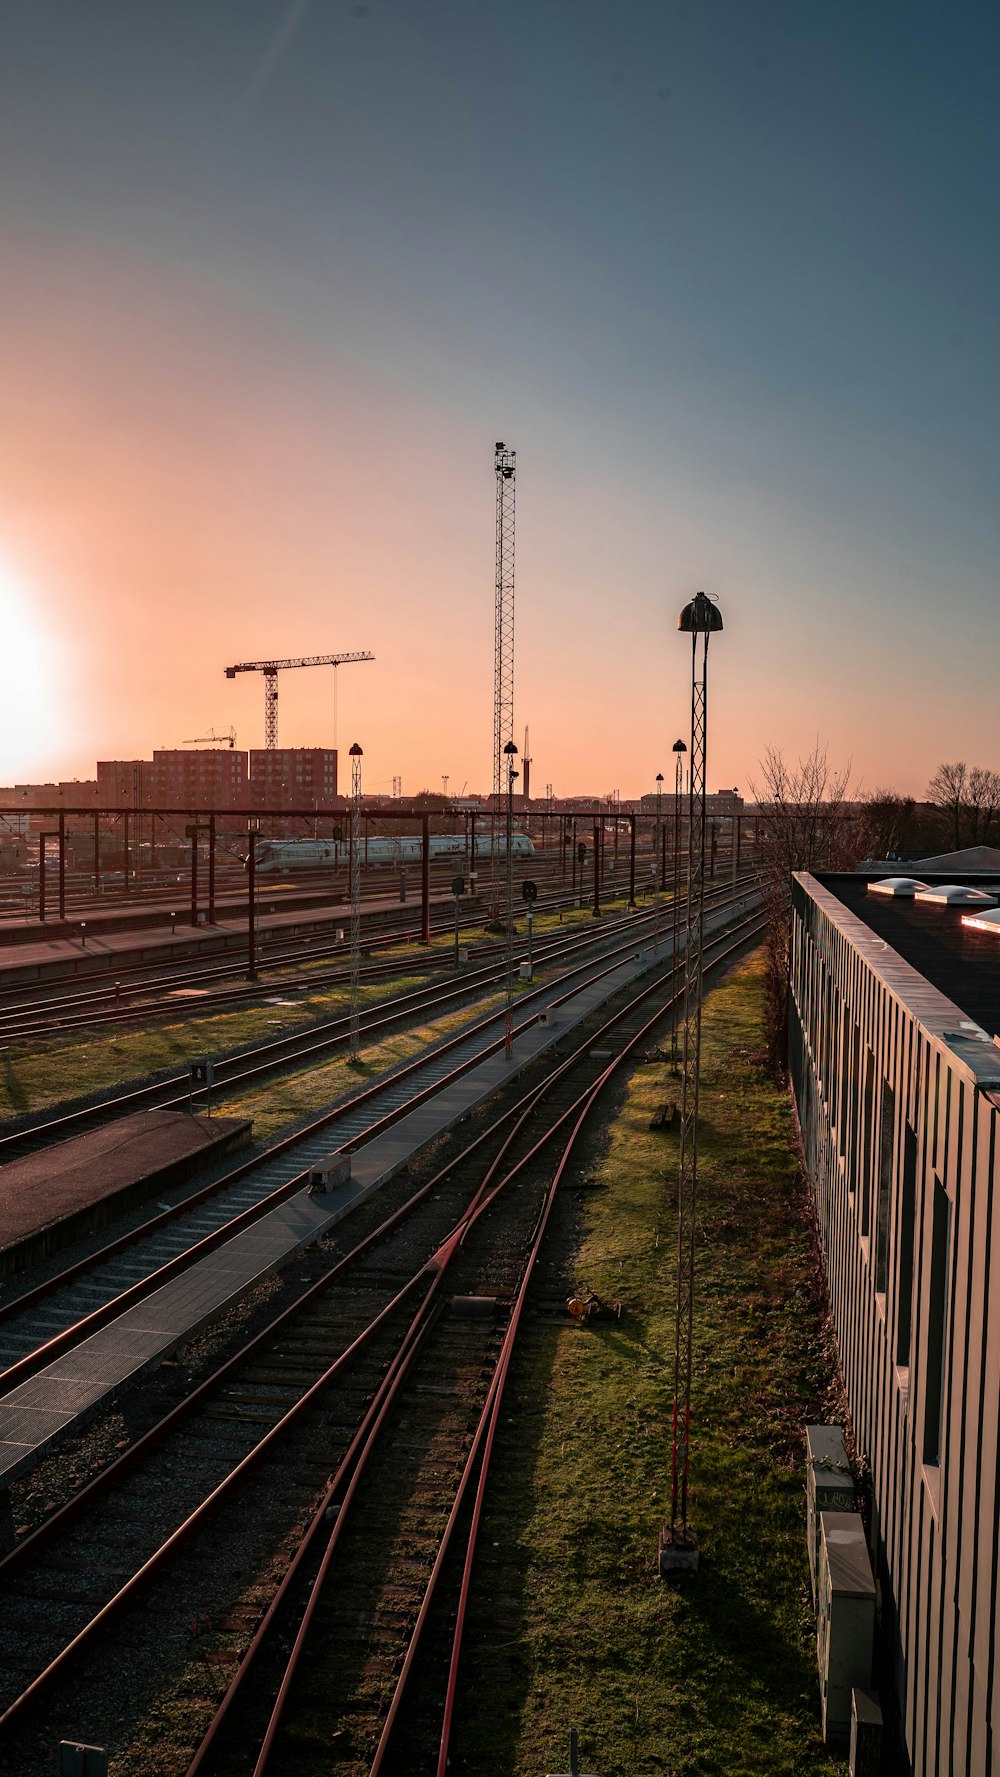 the sun is setting over a train yard